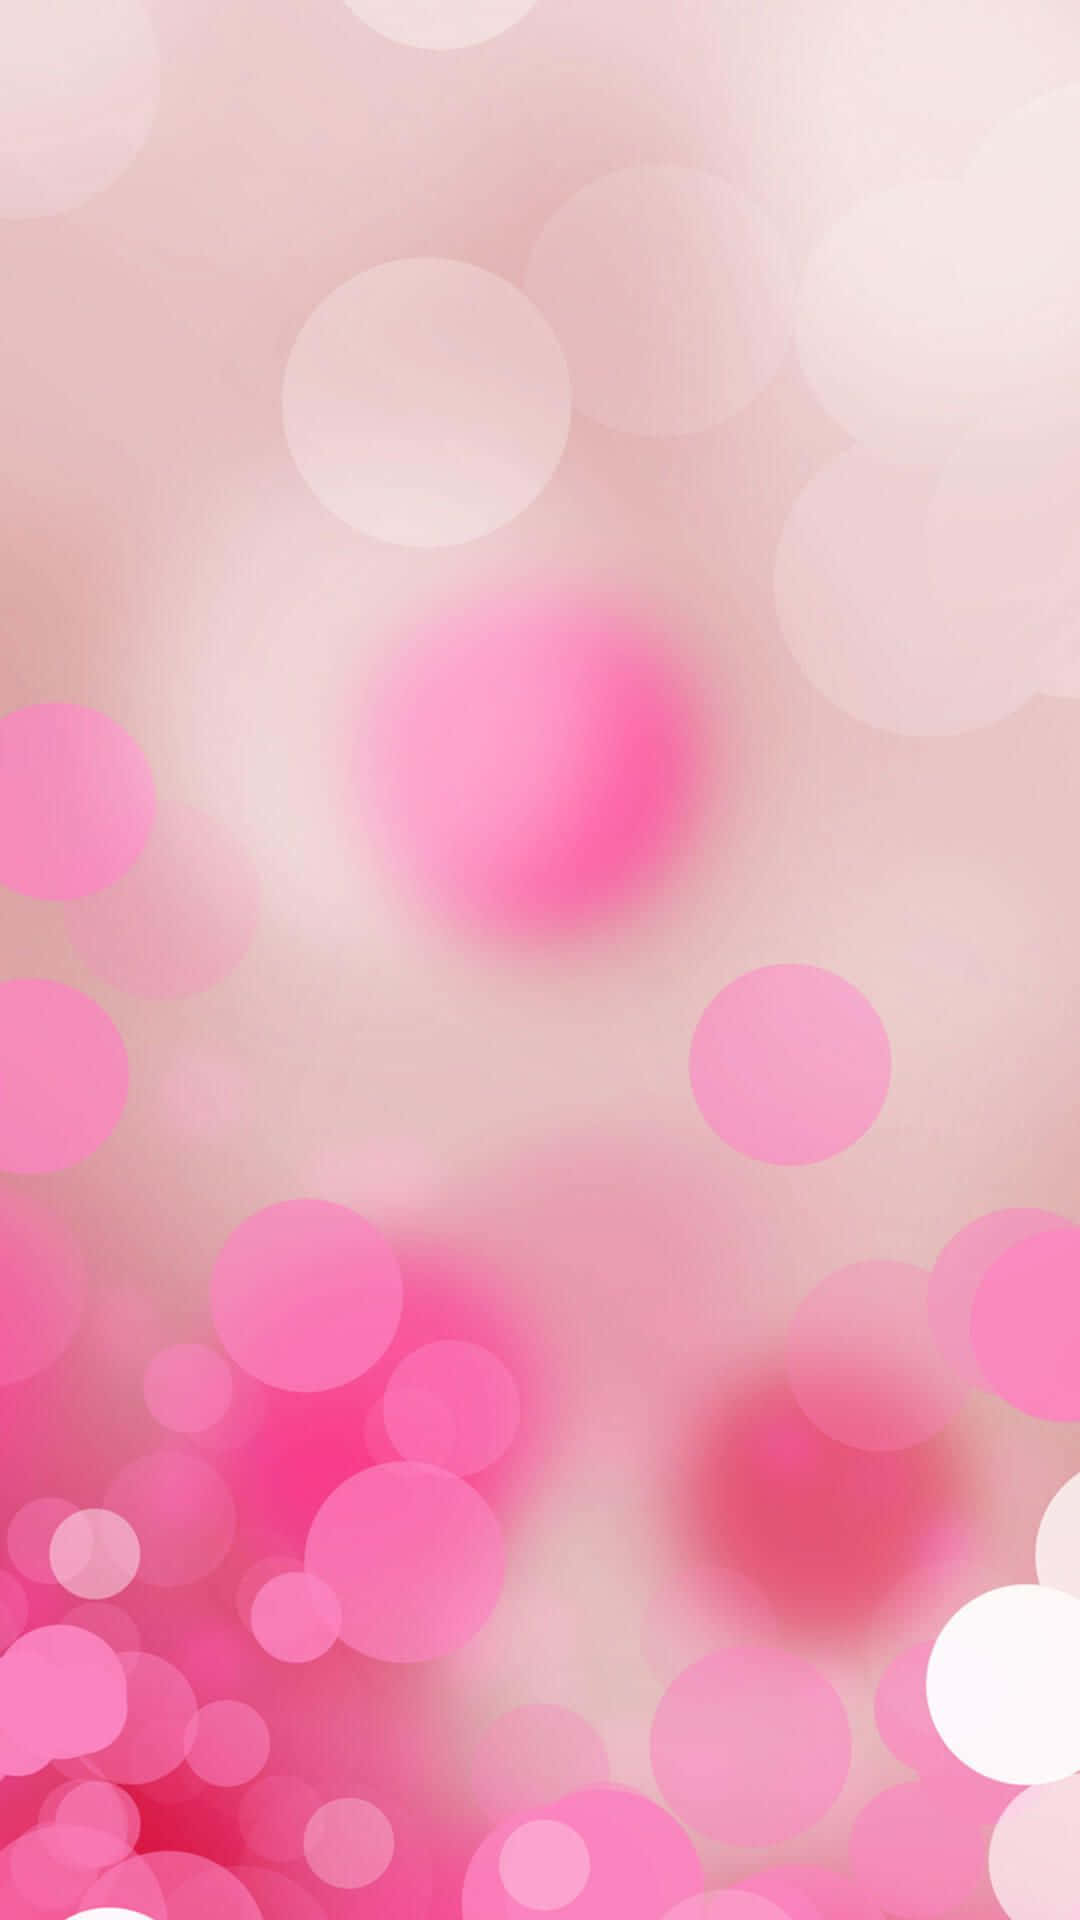 Blurry Pink Spots Girly Tumblr Wallpaper